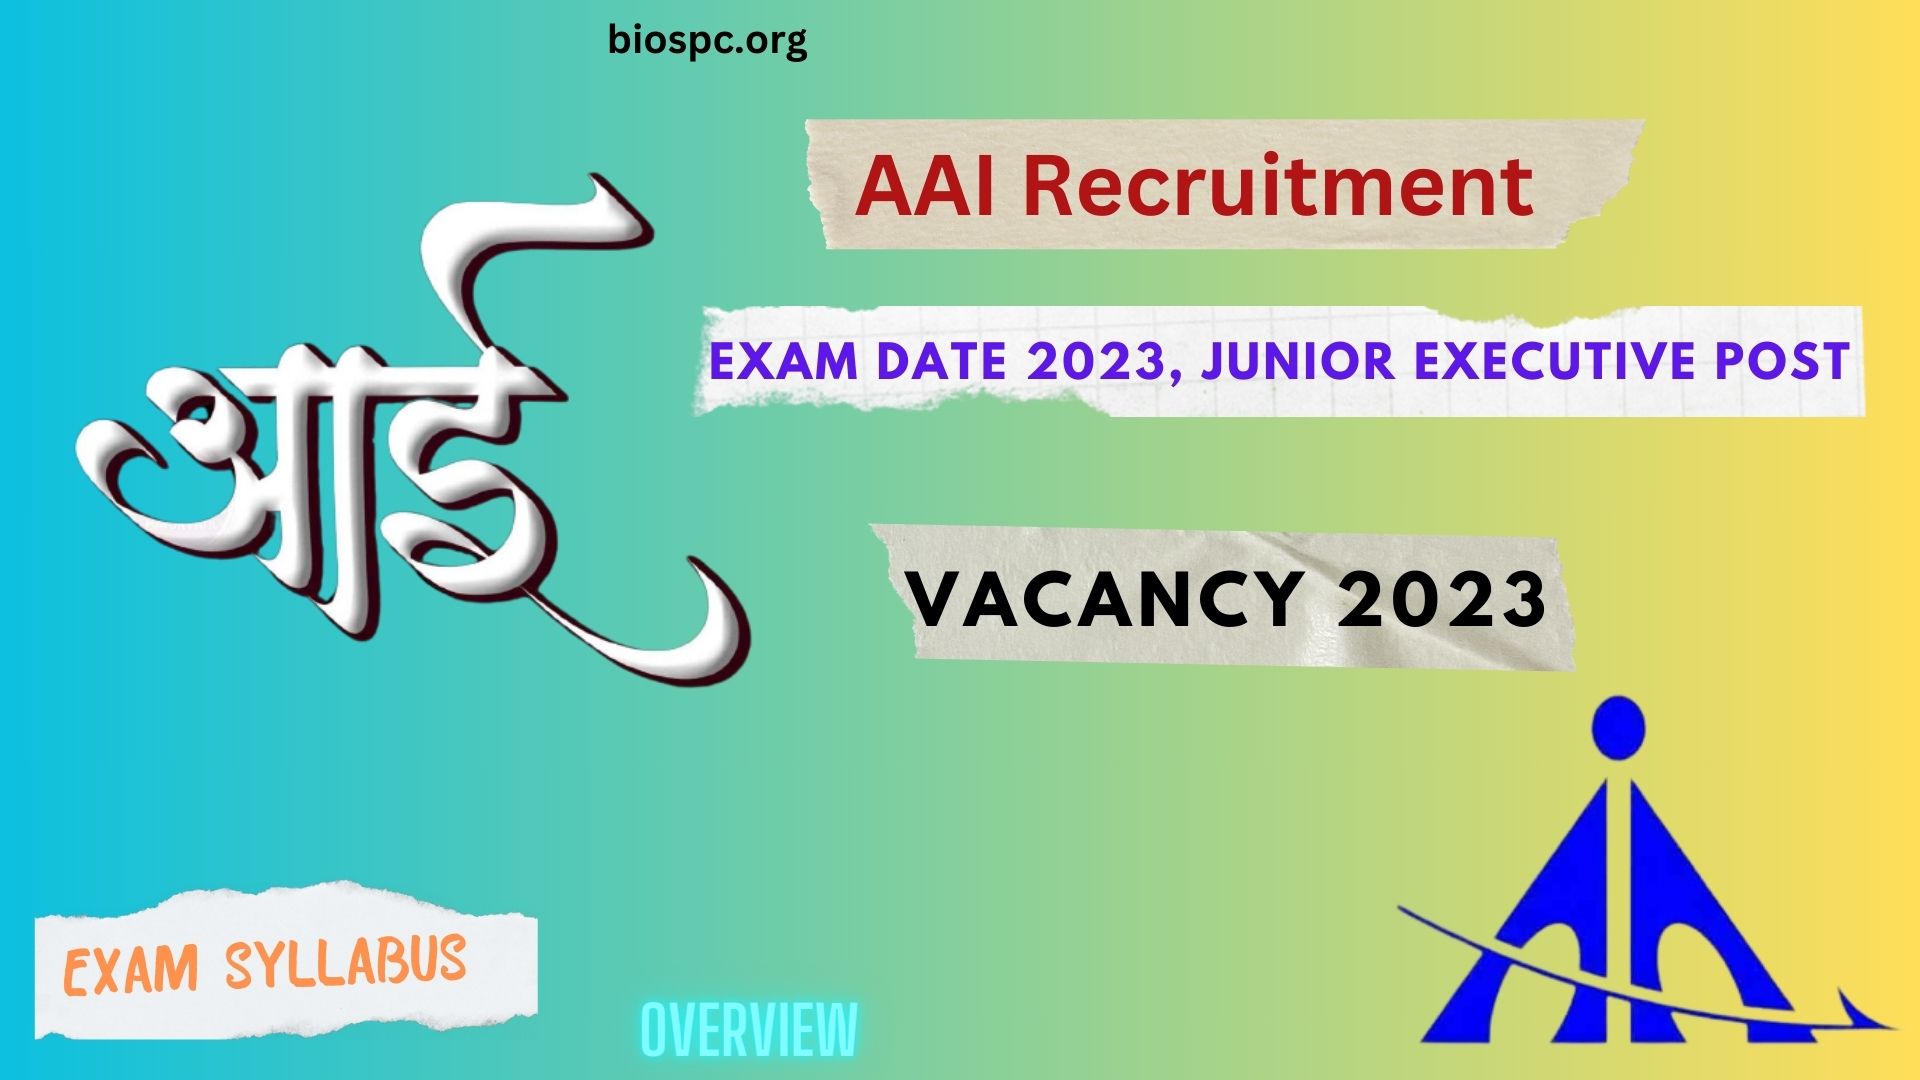 AAI Recruitment Exam Date 2023